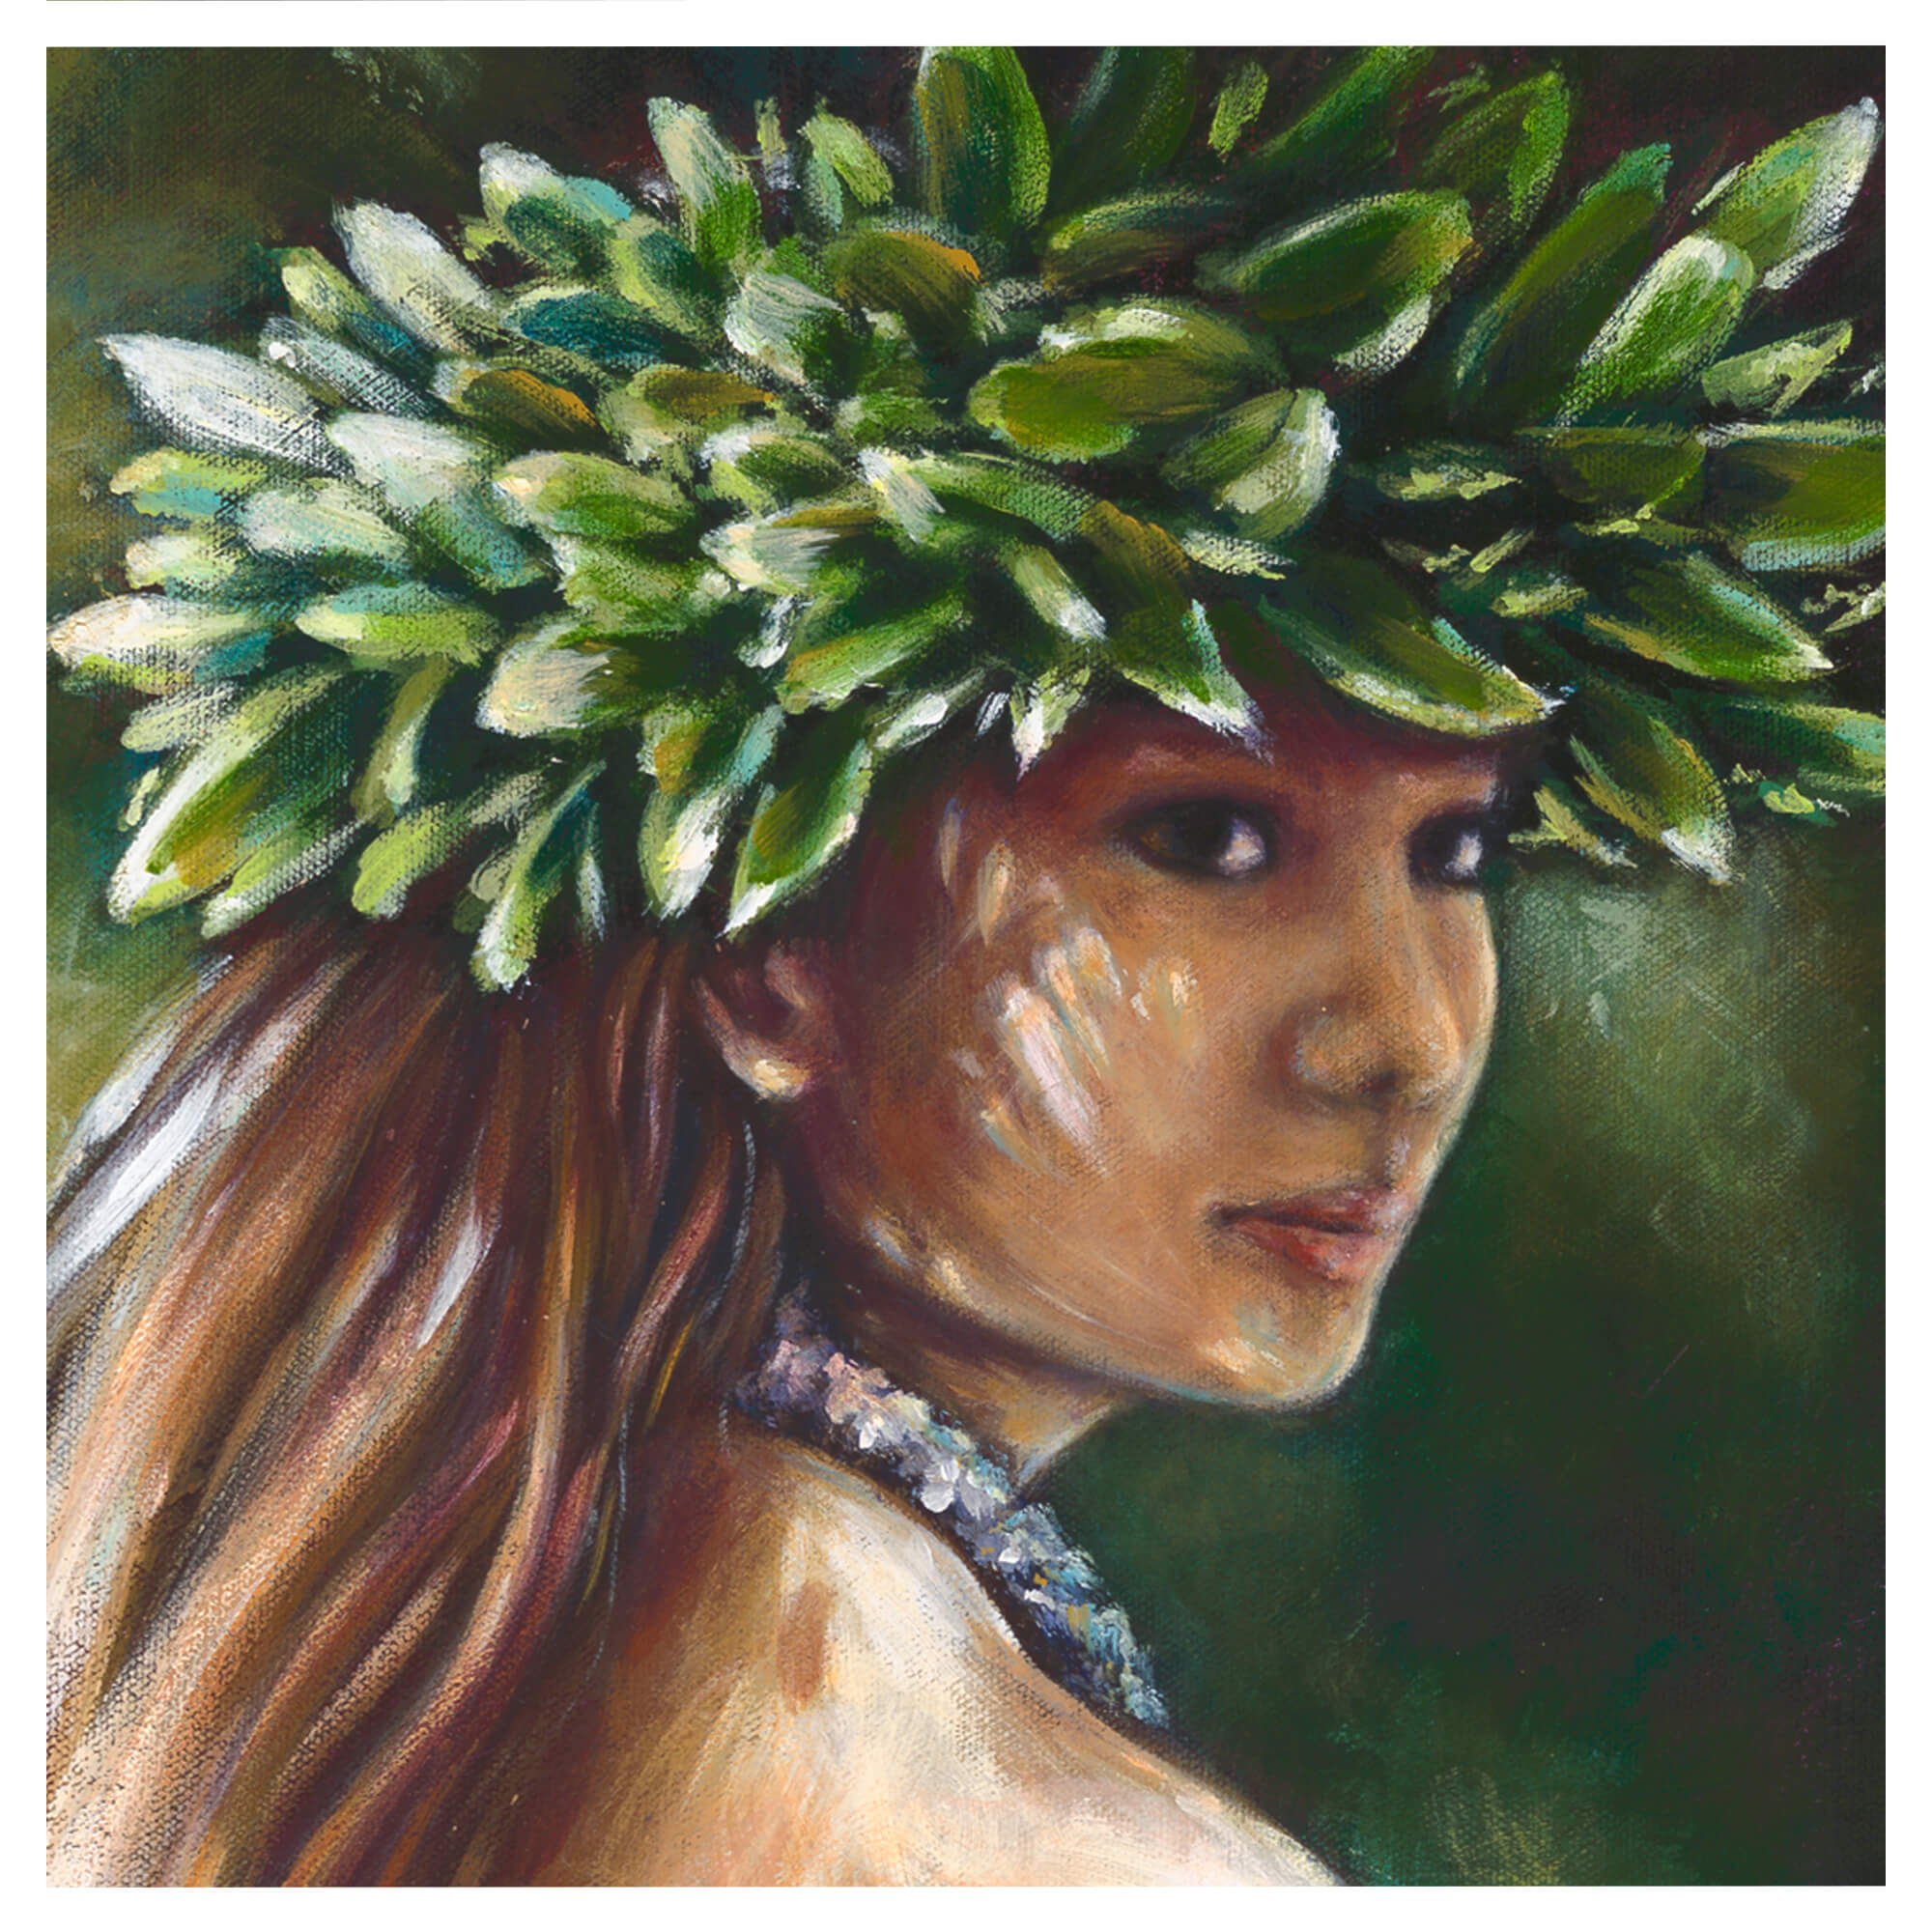 An illustration of a woman by hawaii artist Kristi Petosa